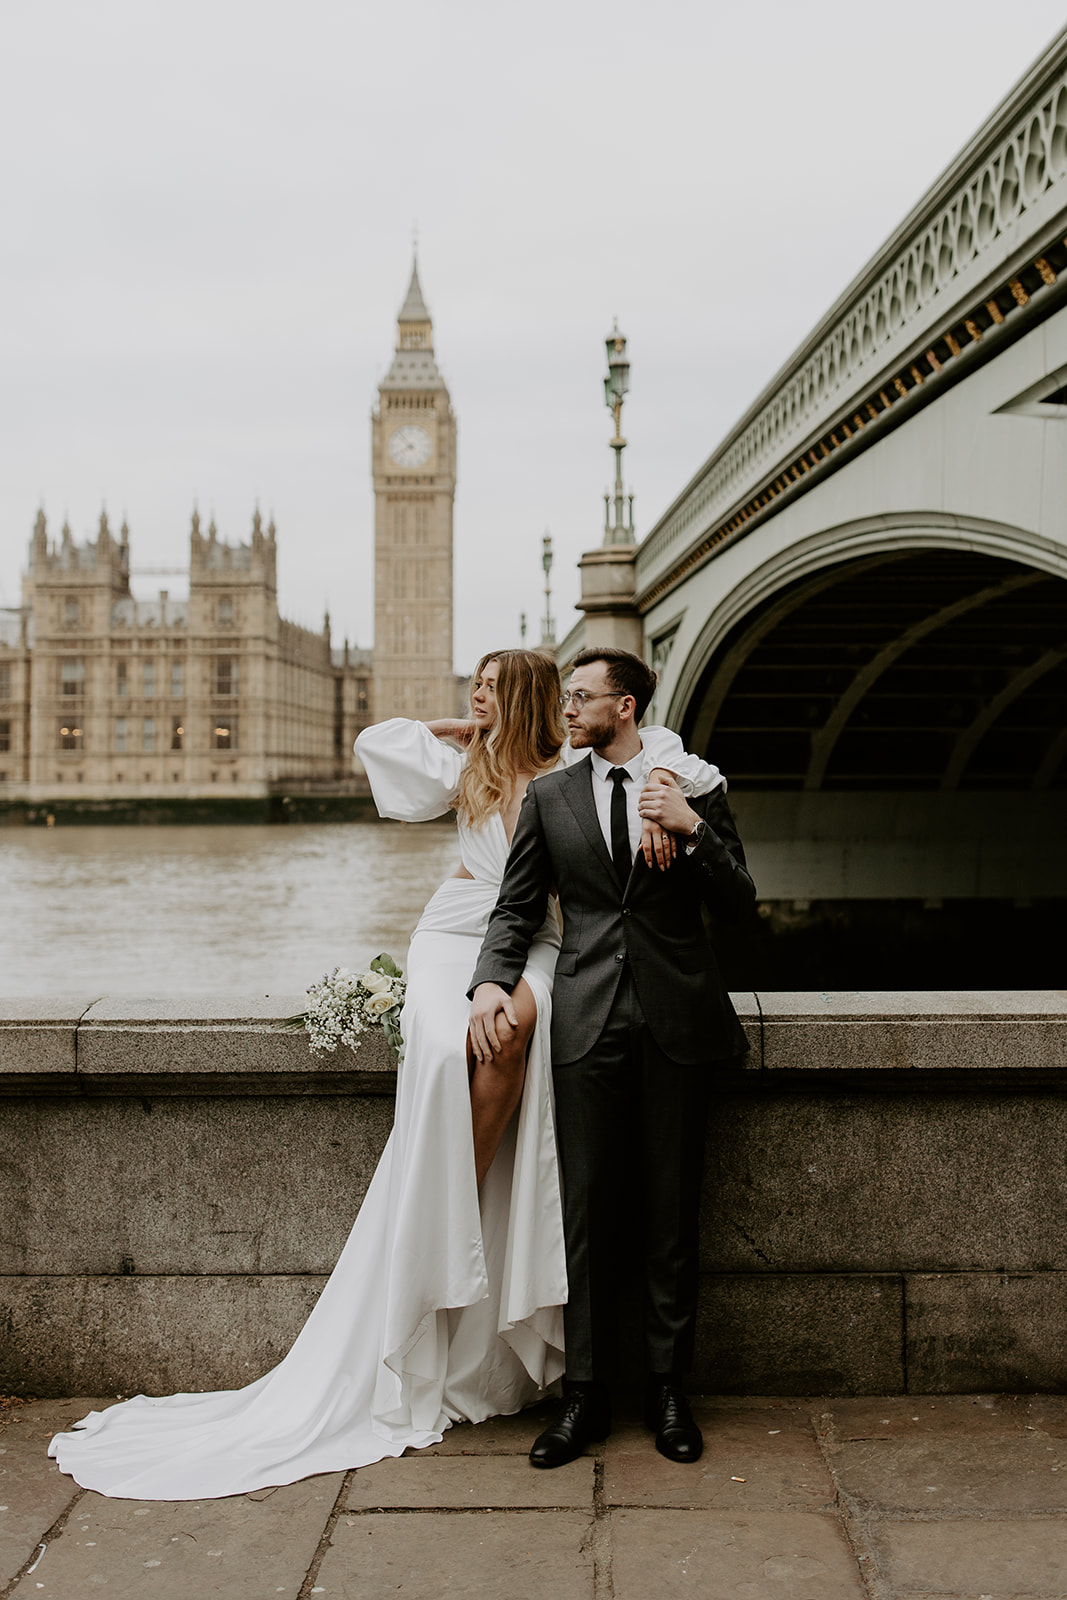 Big Ben Inspiration for Wedding Photos